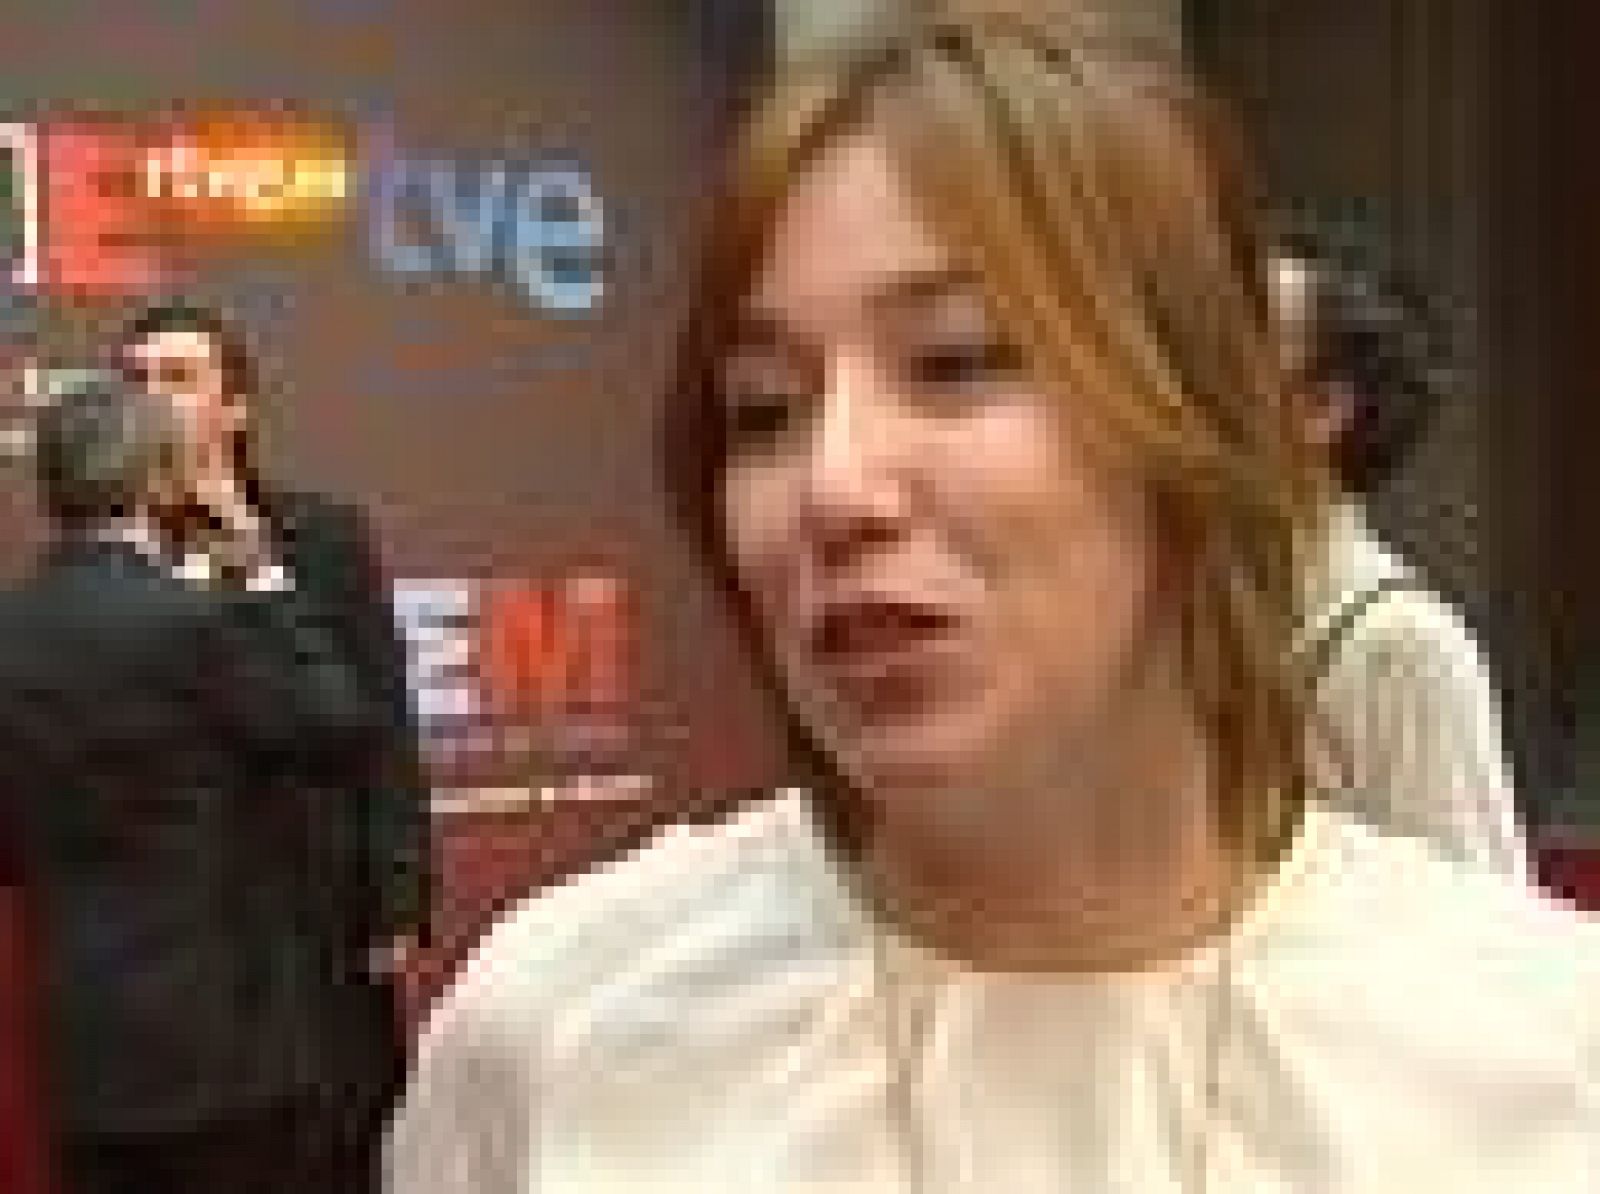 Lola Dueñas, Luis tosar, Verónica Sánchez, Raúl Arévalo, Jordi Mollà o Blanca Romero habaln para las cámaras de RTVE. (23/01/10)